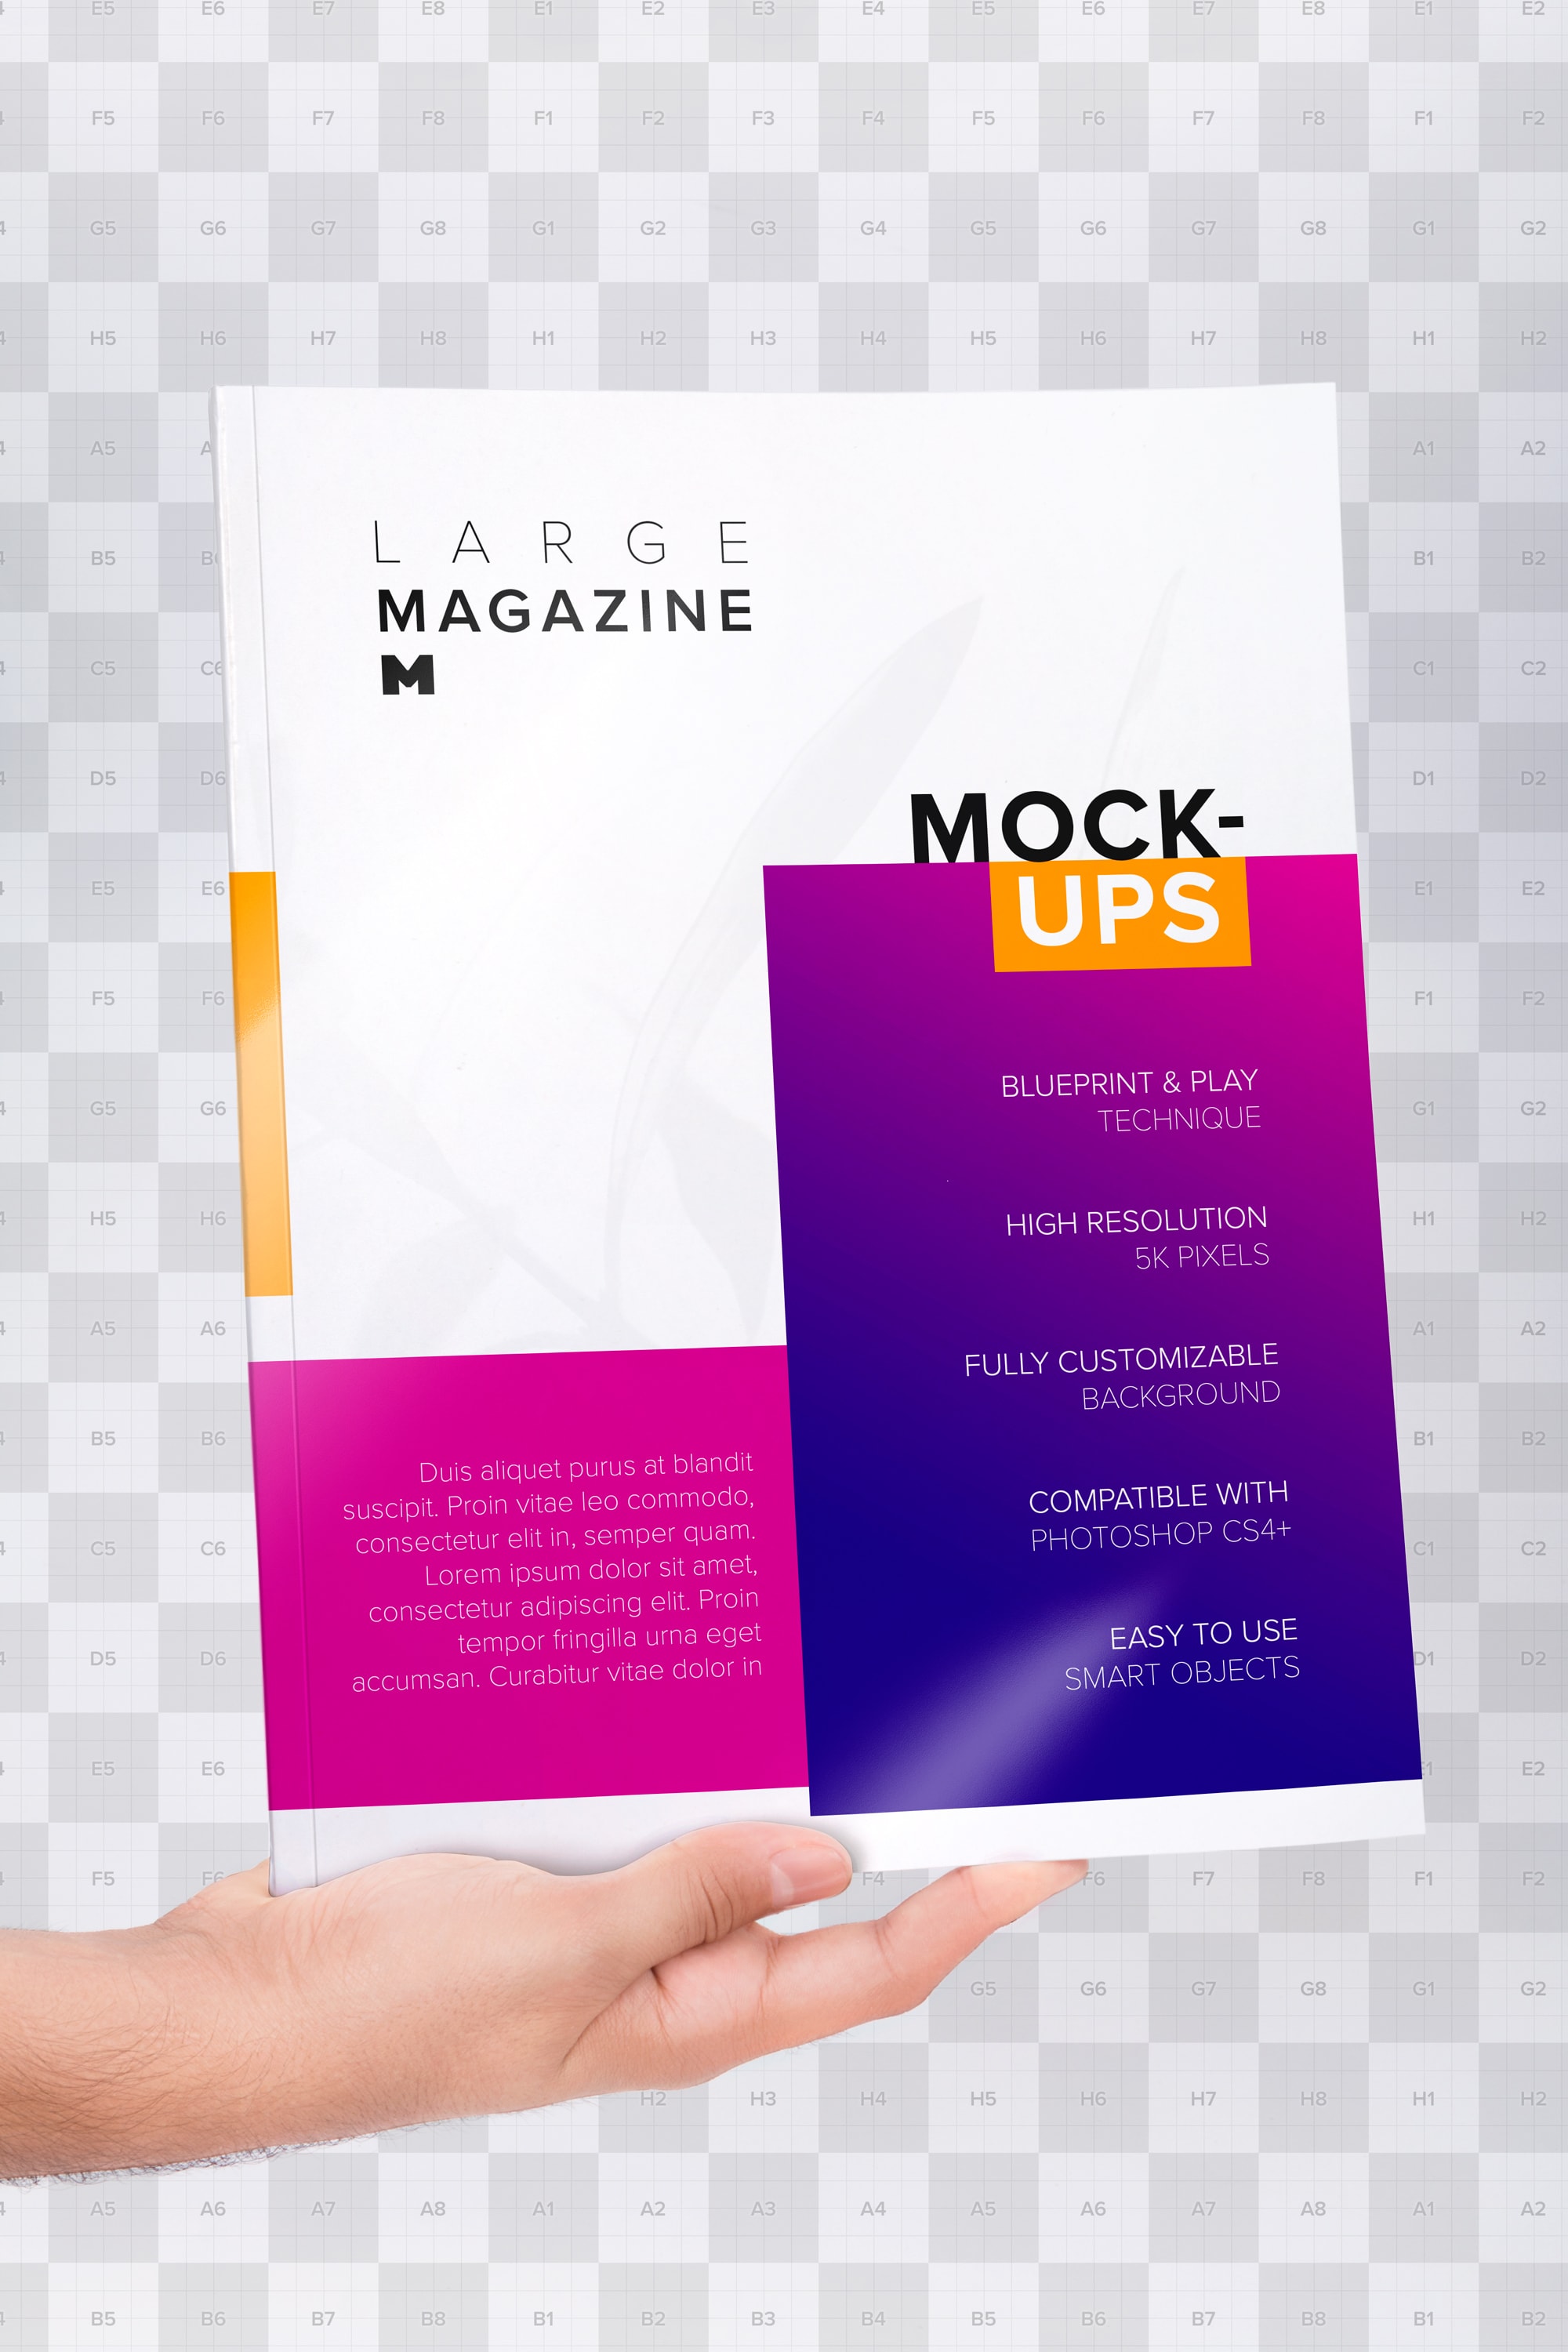 大型杂志封面设计效果图样机01 Large Magazine Cover Mockup 01插图(1)